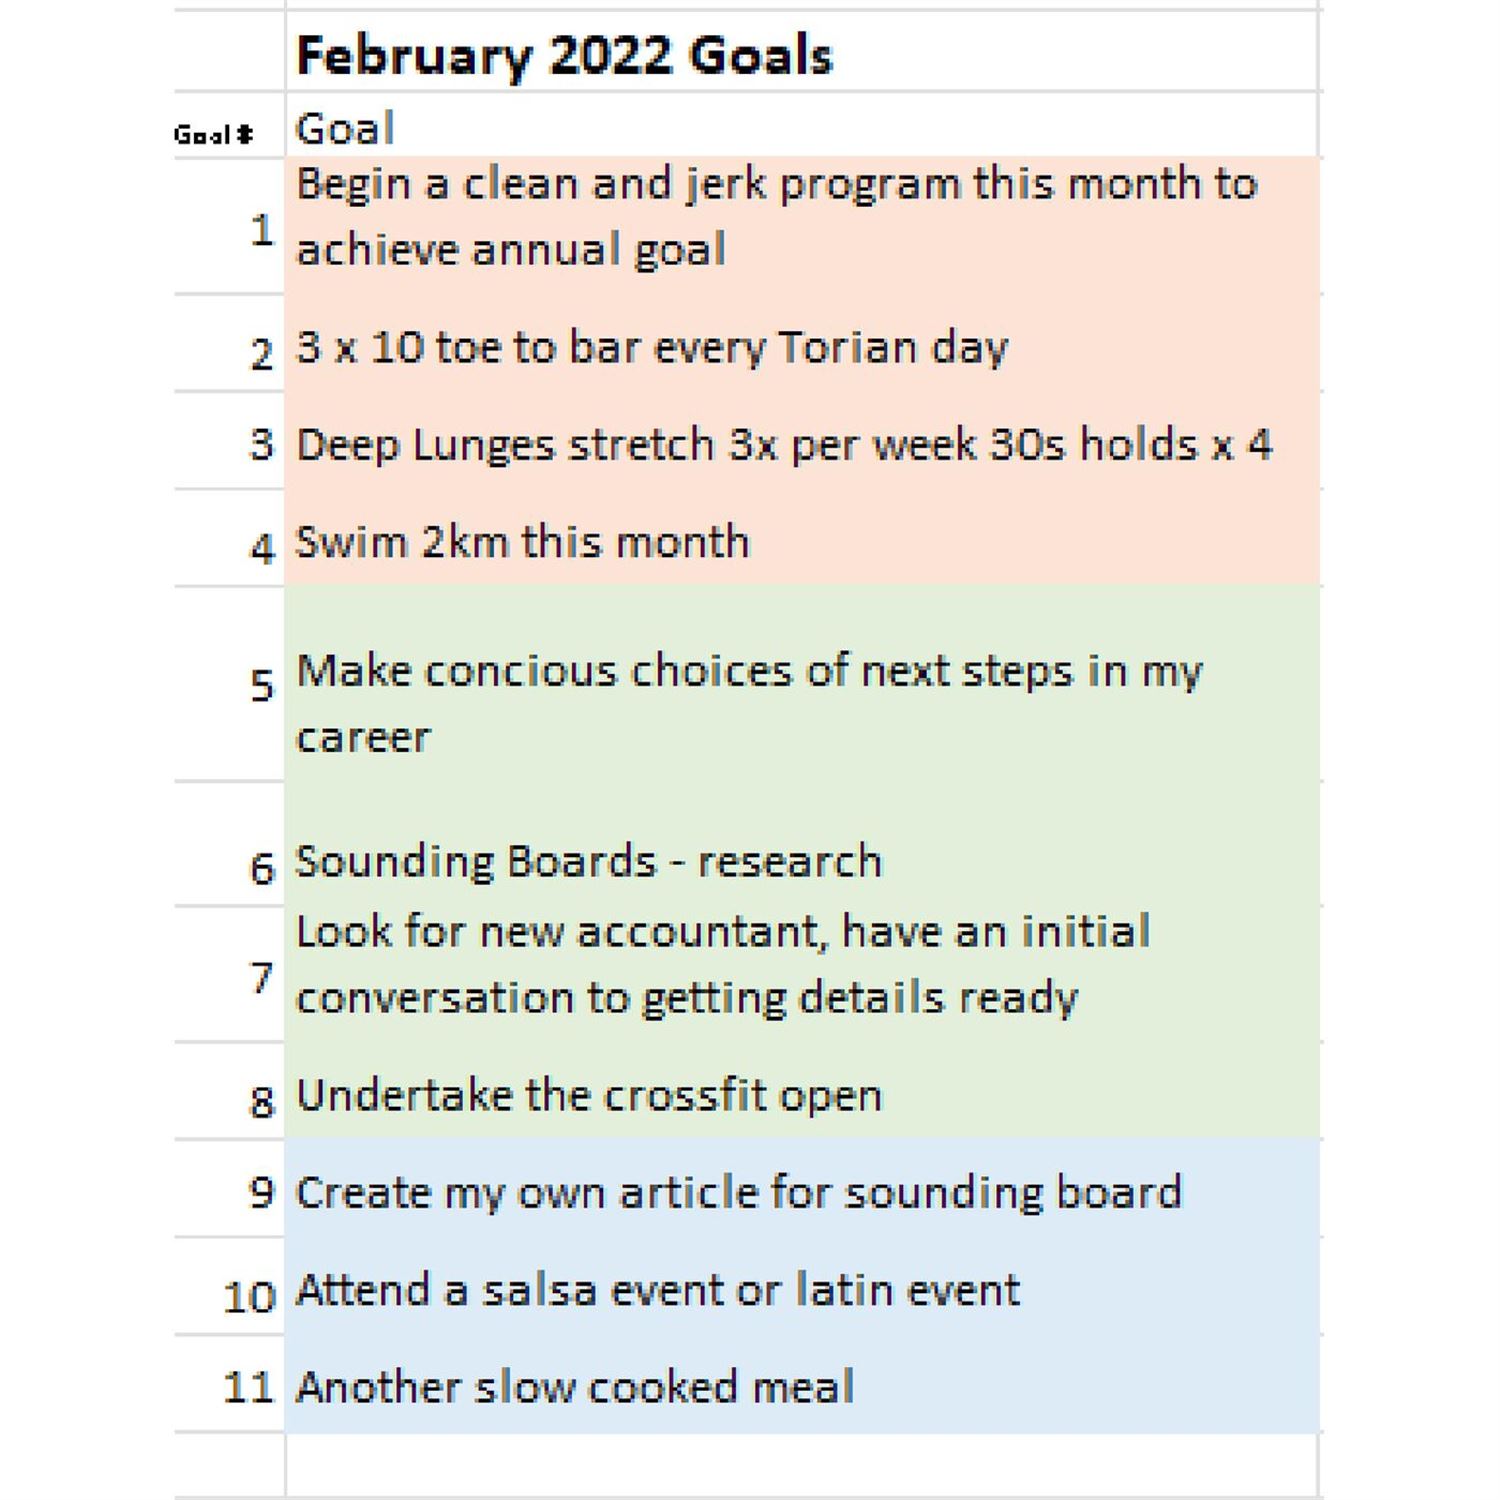 Juan's Feb Goals - Body